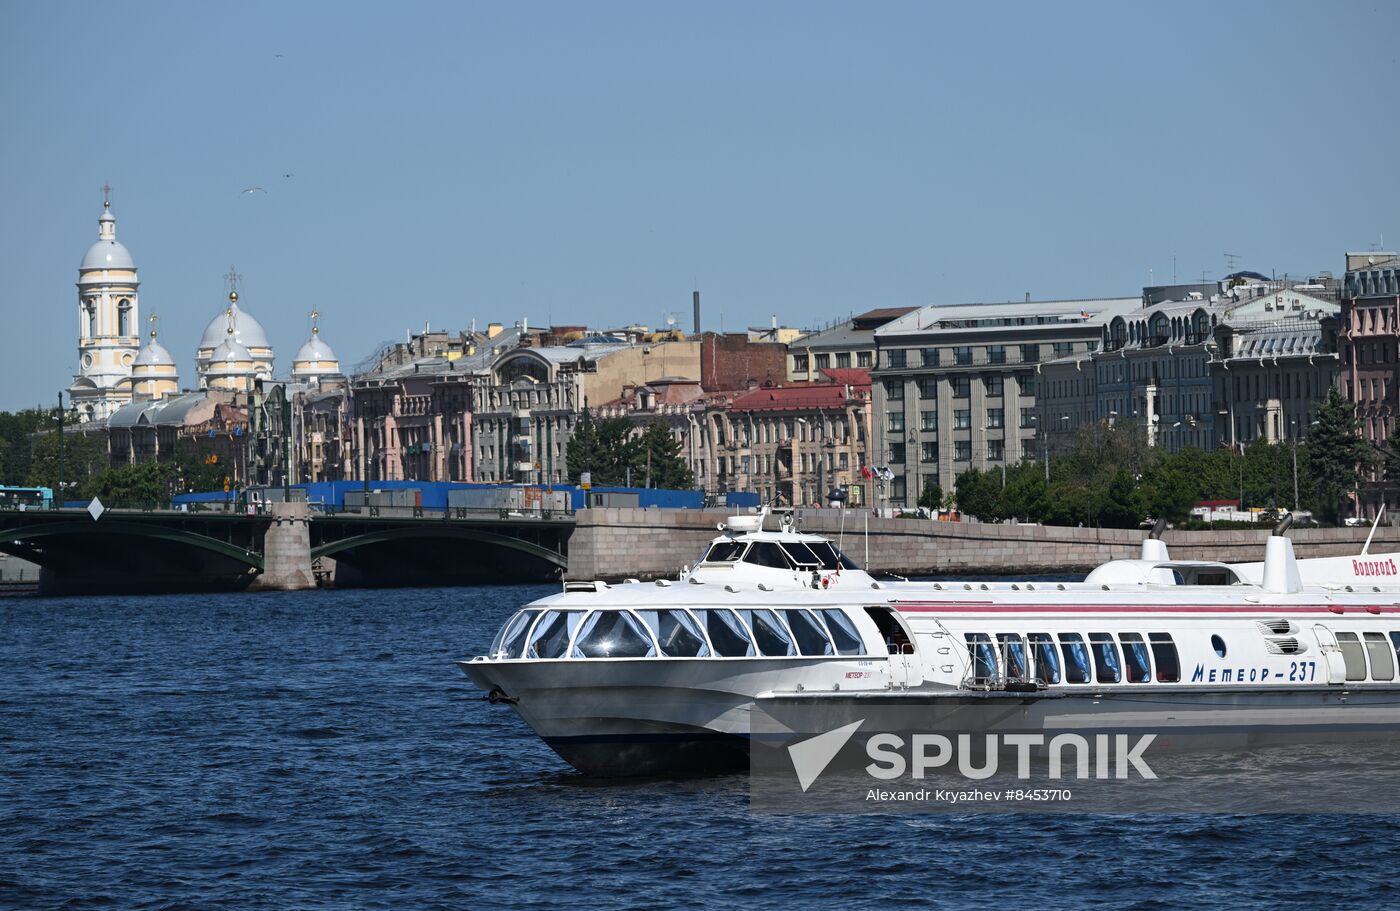 Russia St. Petersburg Tourism